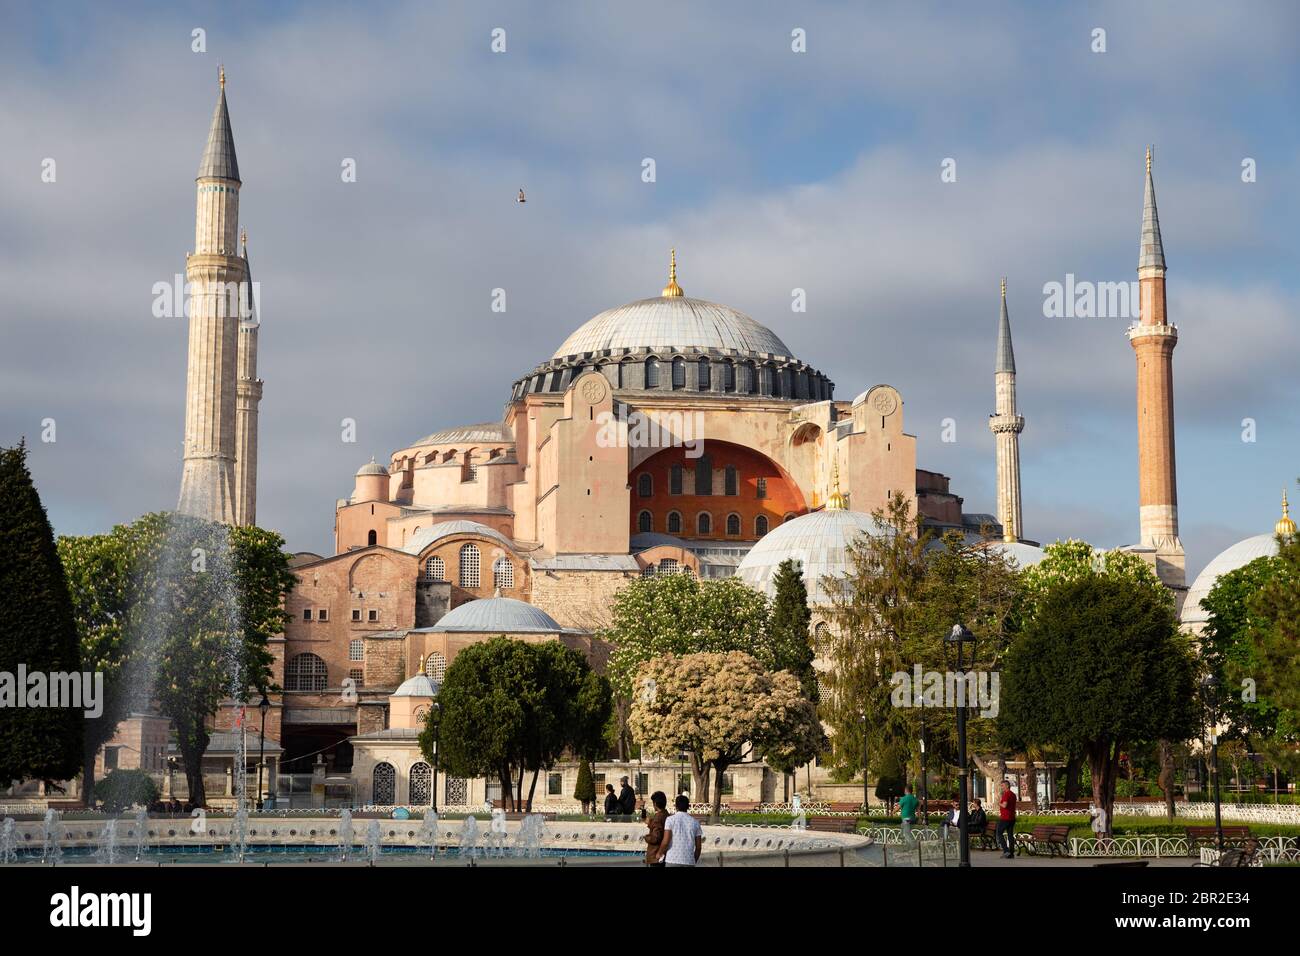 ISTANBUL, TURKEY - MAY 13, 2020: Daily life in Sultanahmet Square during Coronavirus Pandemic Stock Photo